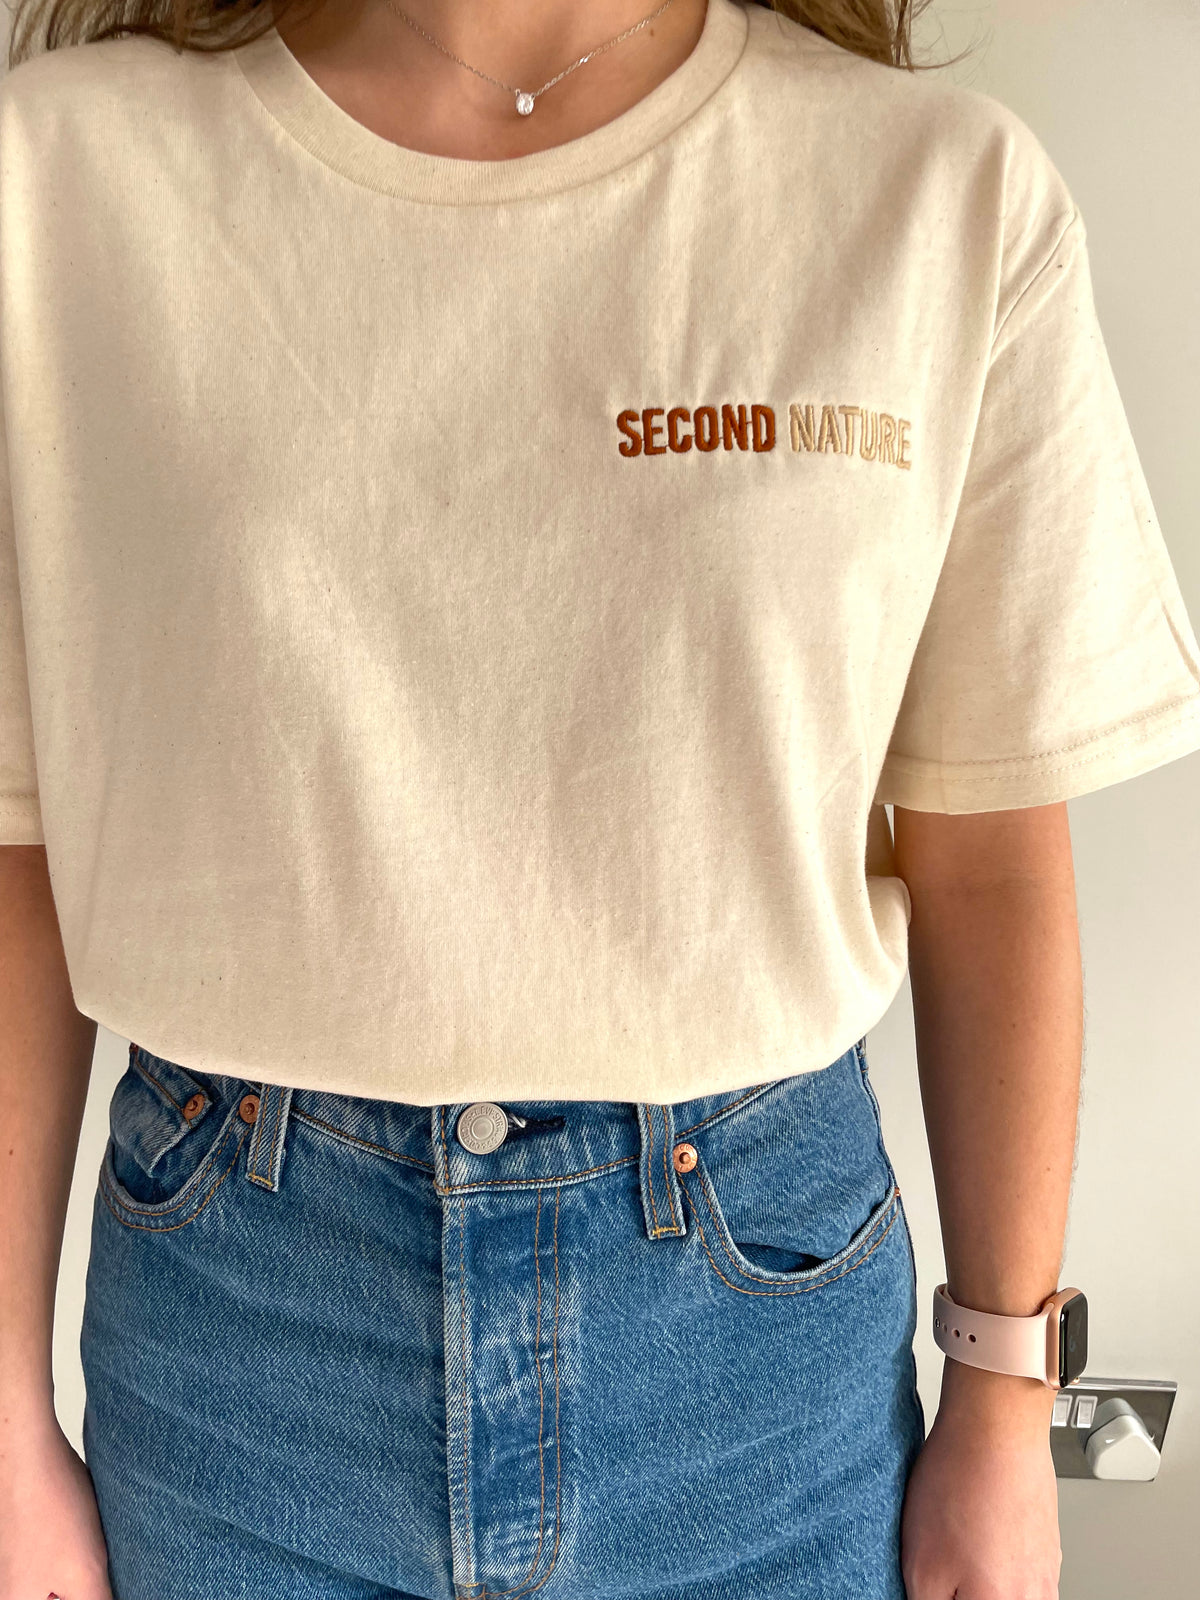 Second Nature Leisurewear T-shirt in Cream